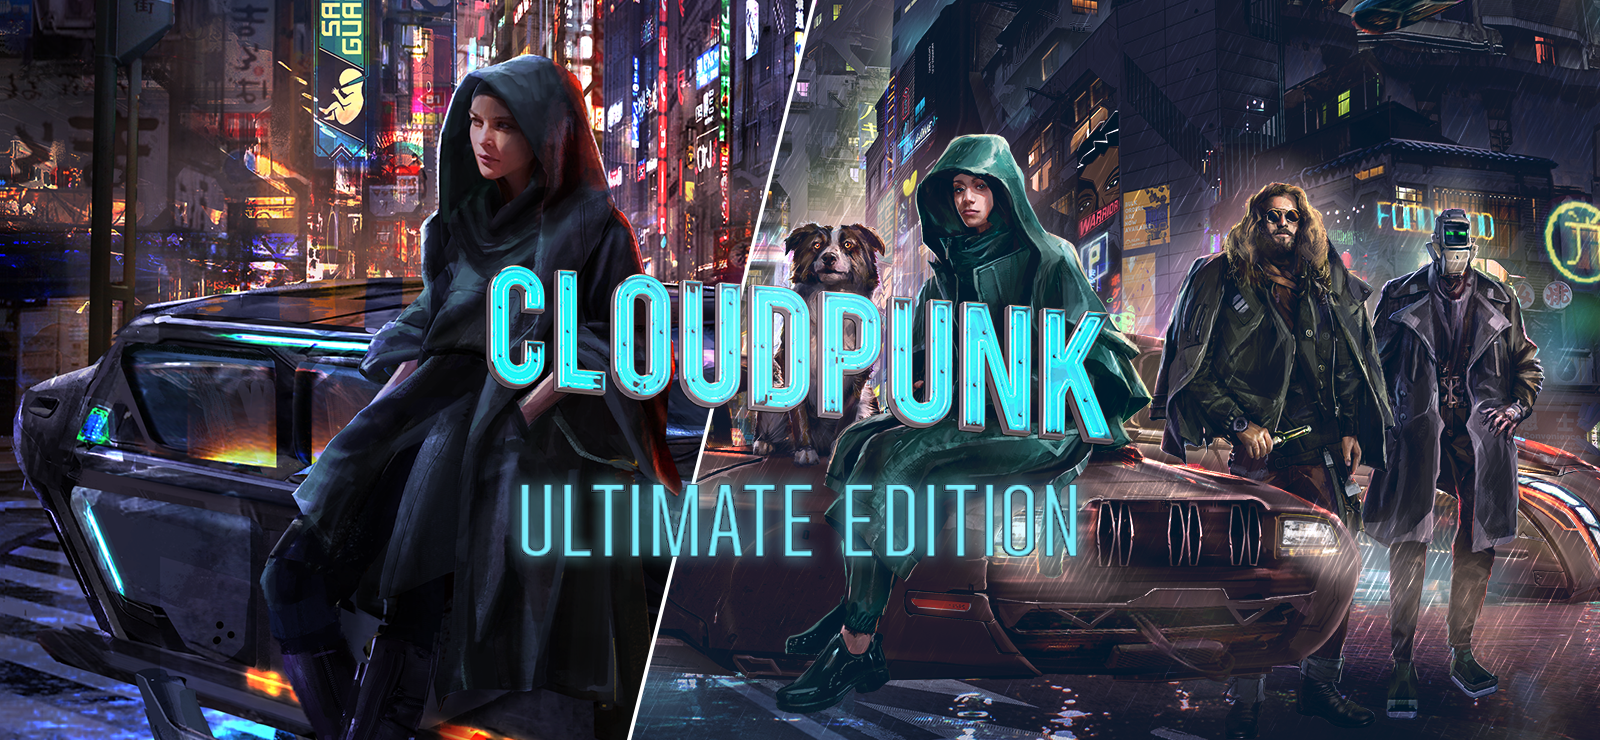 Cloudpunk: Ultimate Edition